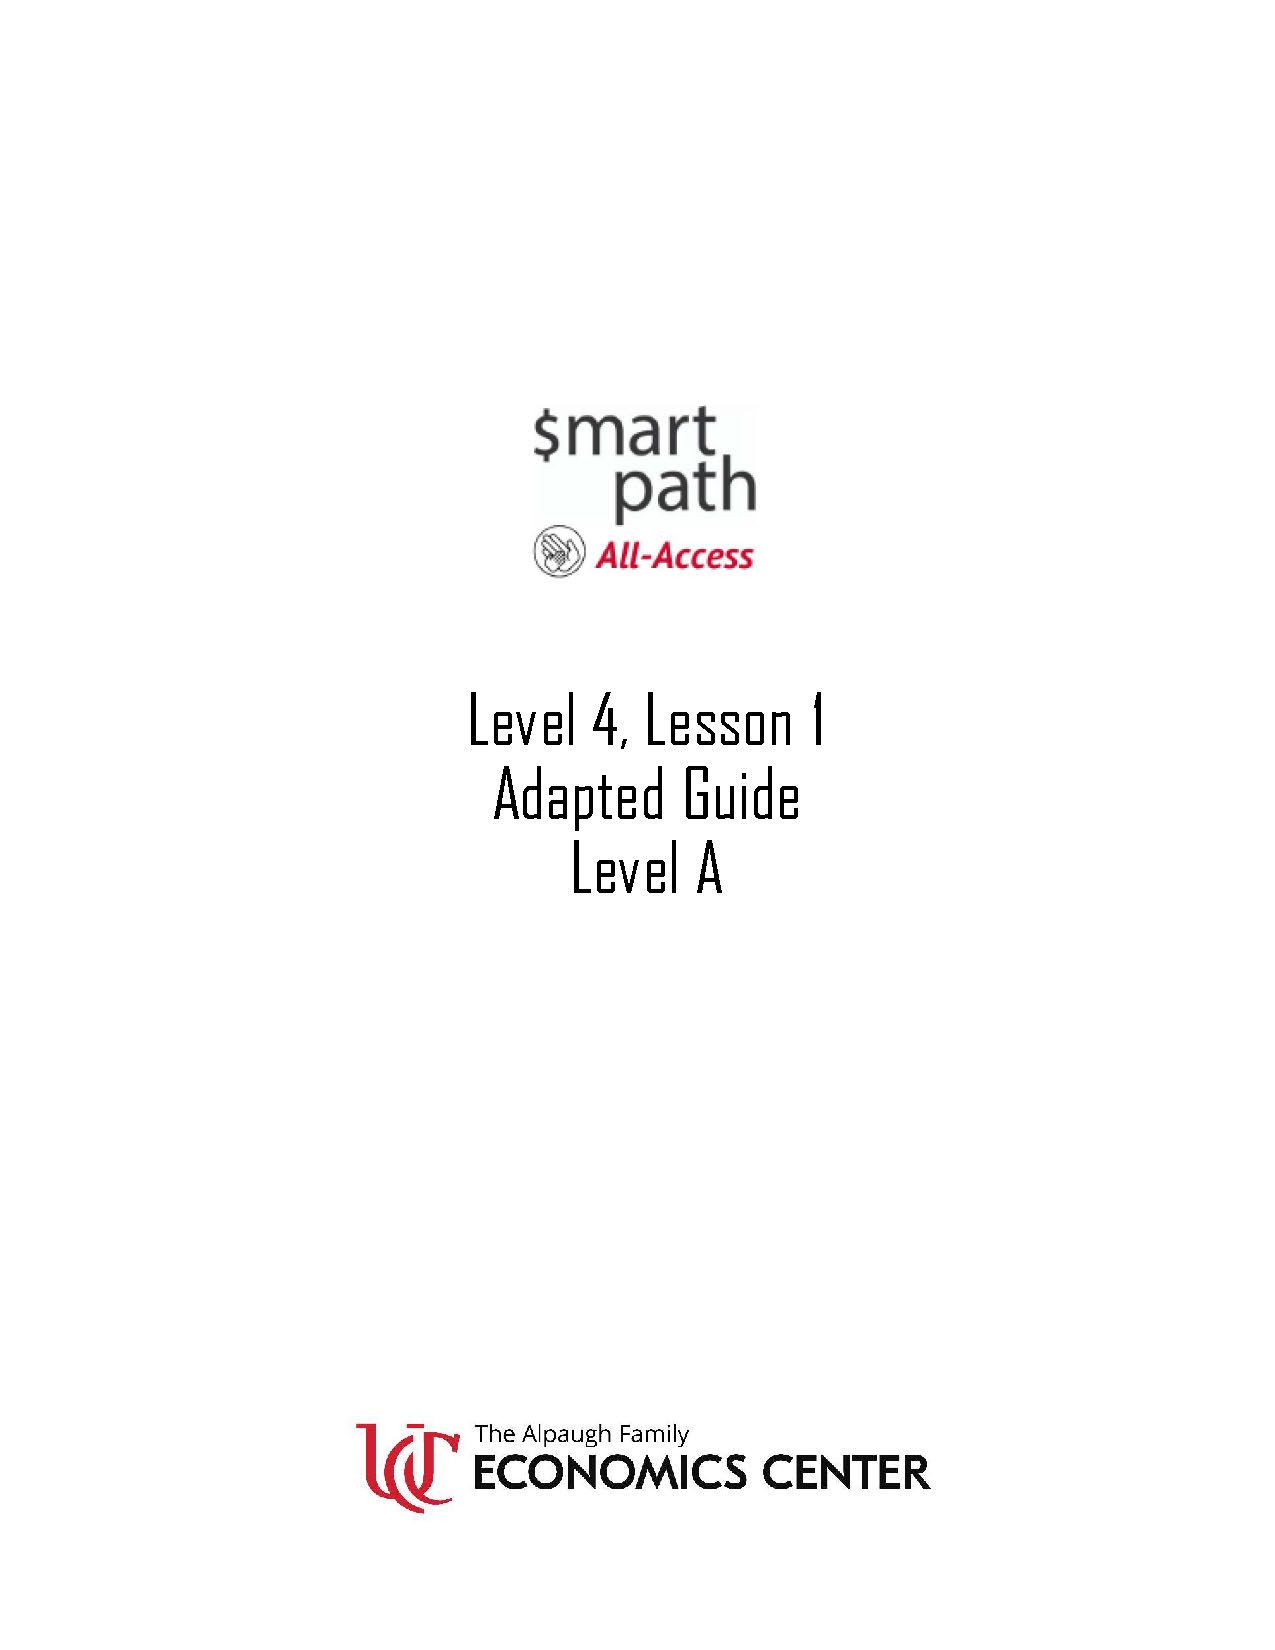 Level 4 Lesson 1 Cover